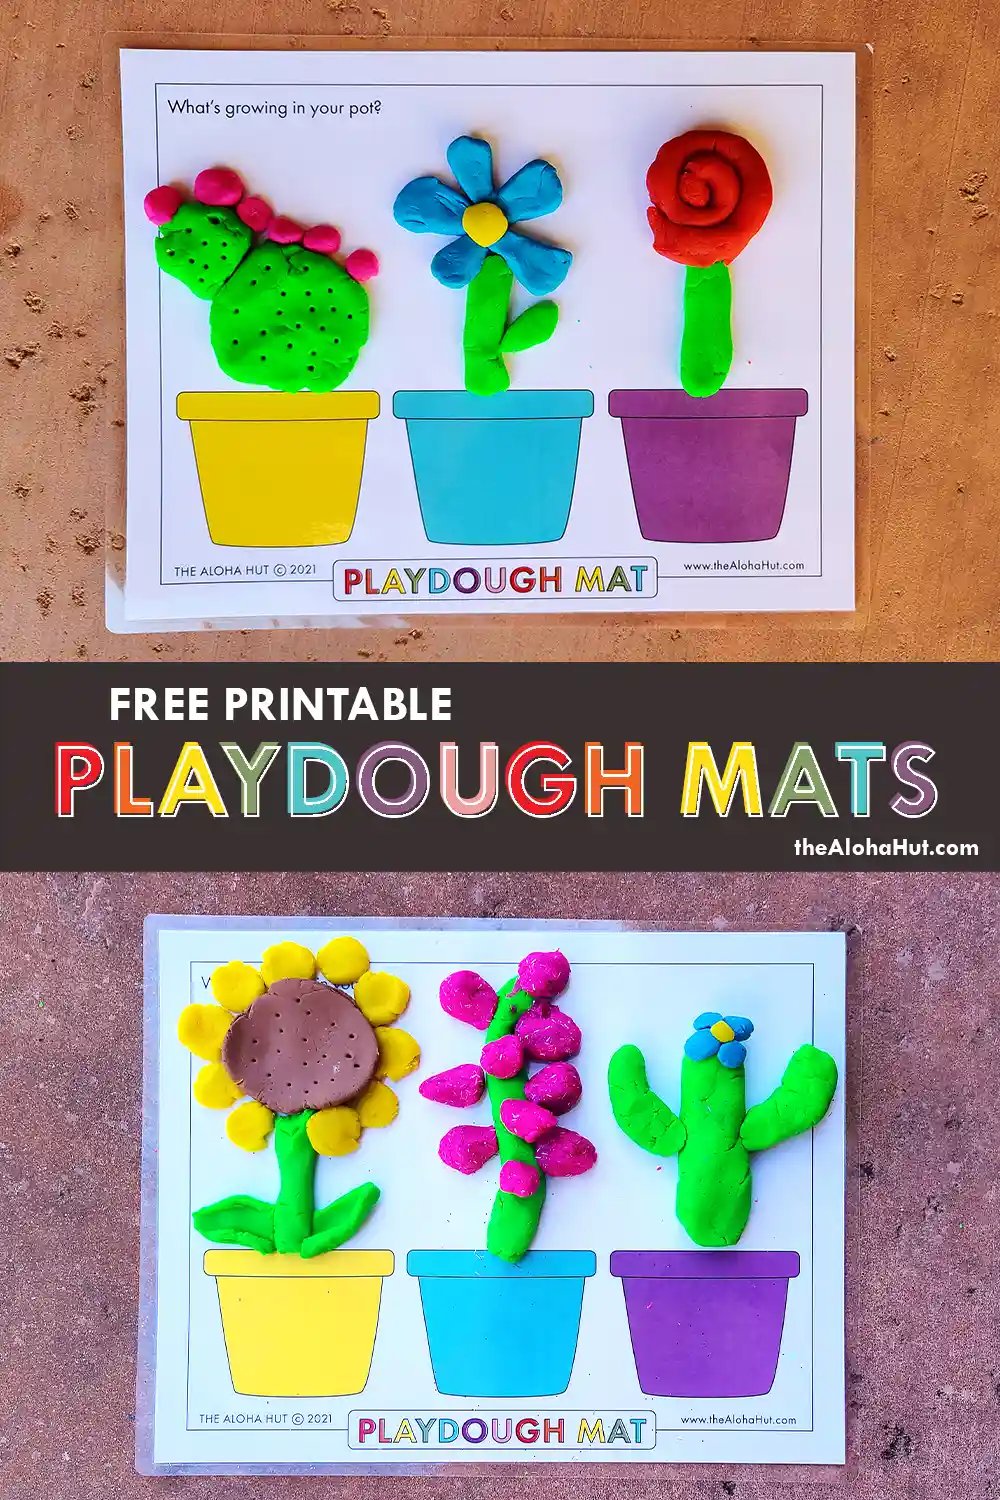 Free Easter Playdough Mats - Lemon and Kiwi Designs